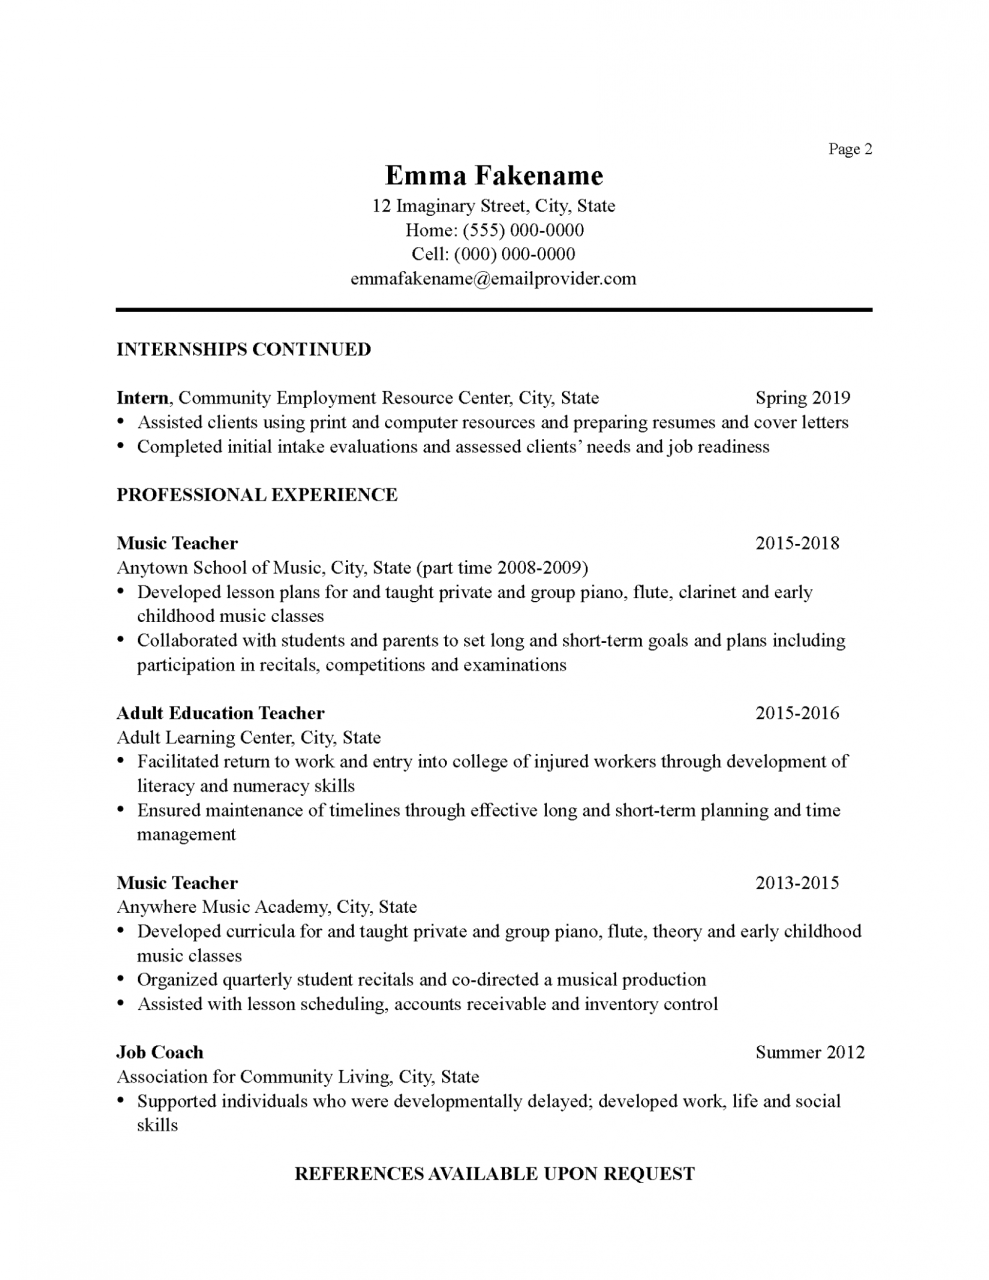 13 Job Vacancy Resume Format Career change resume, Resume examples